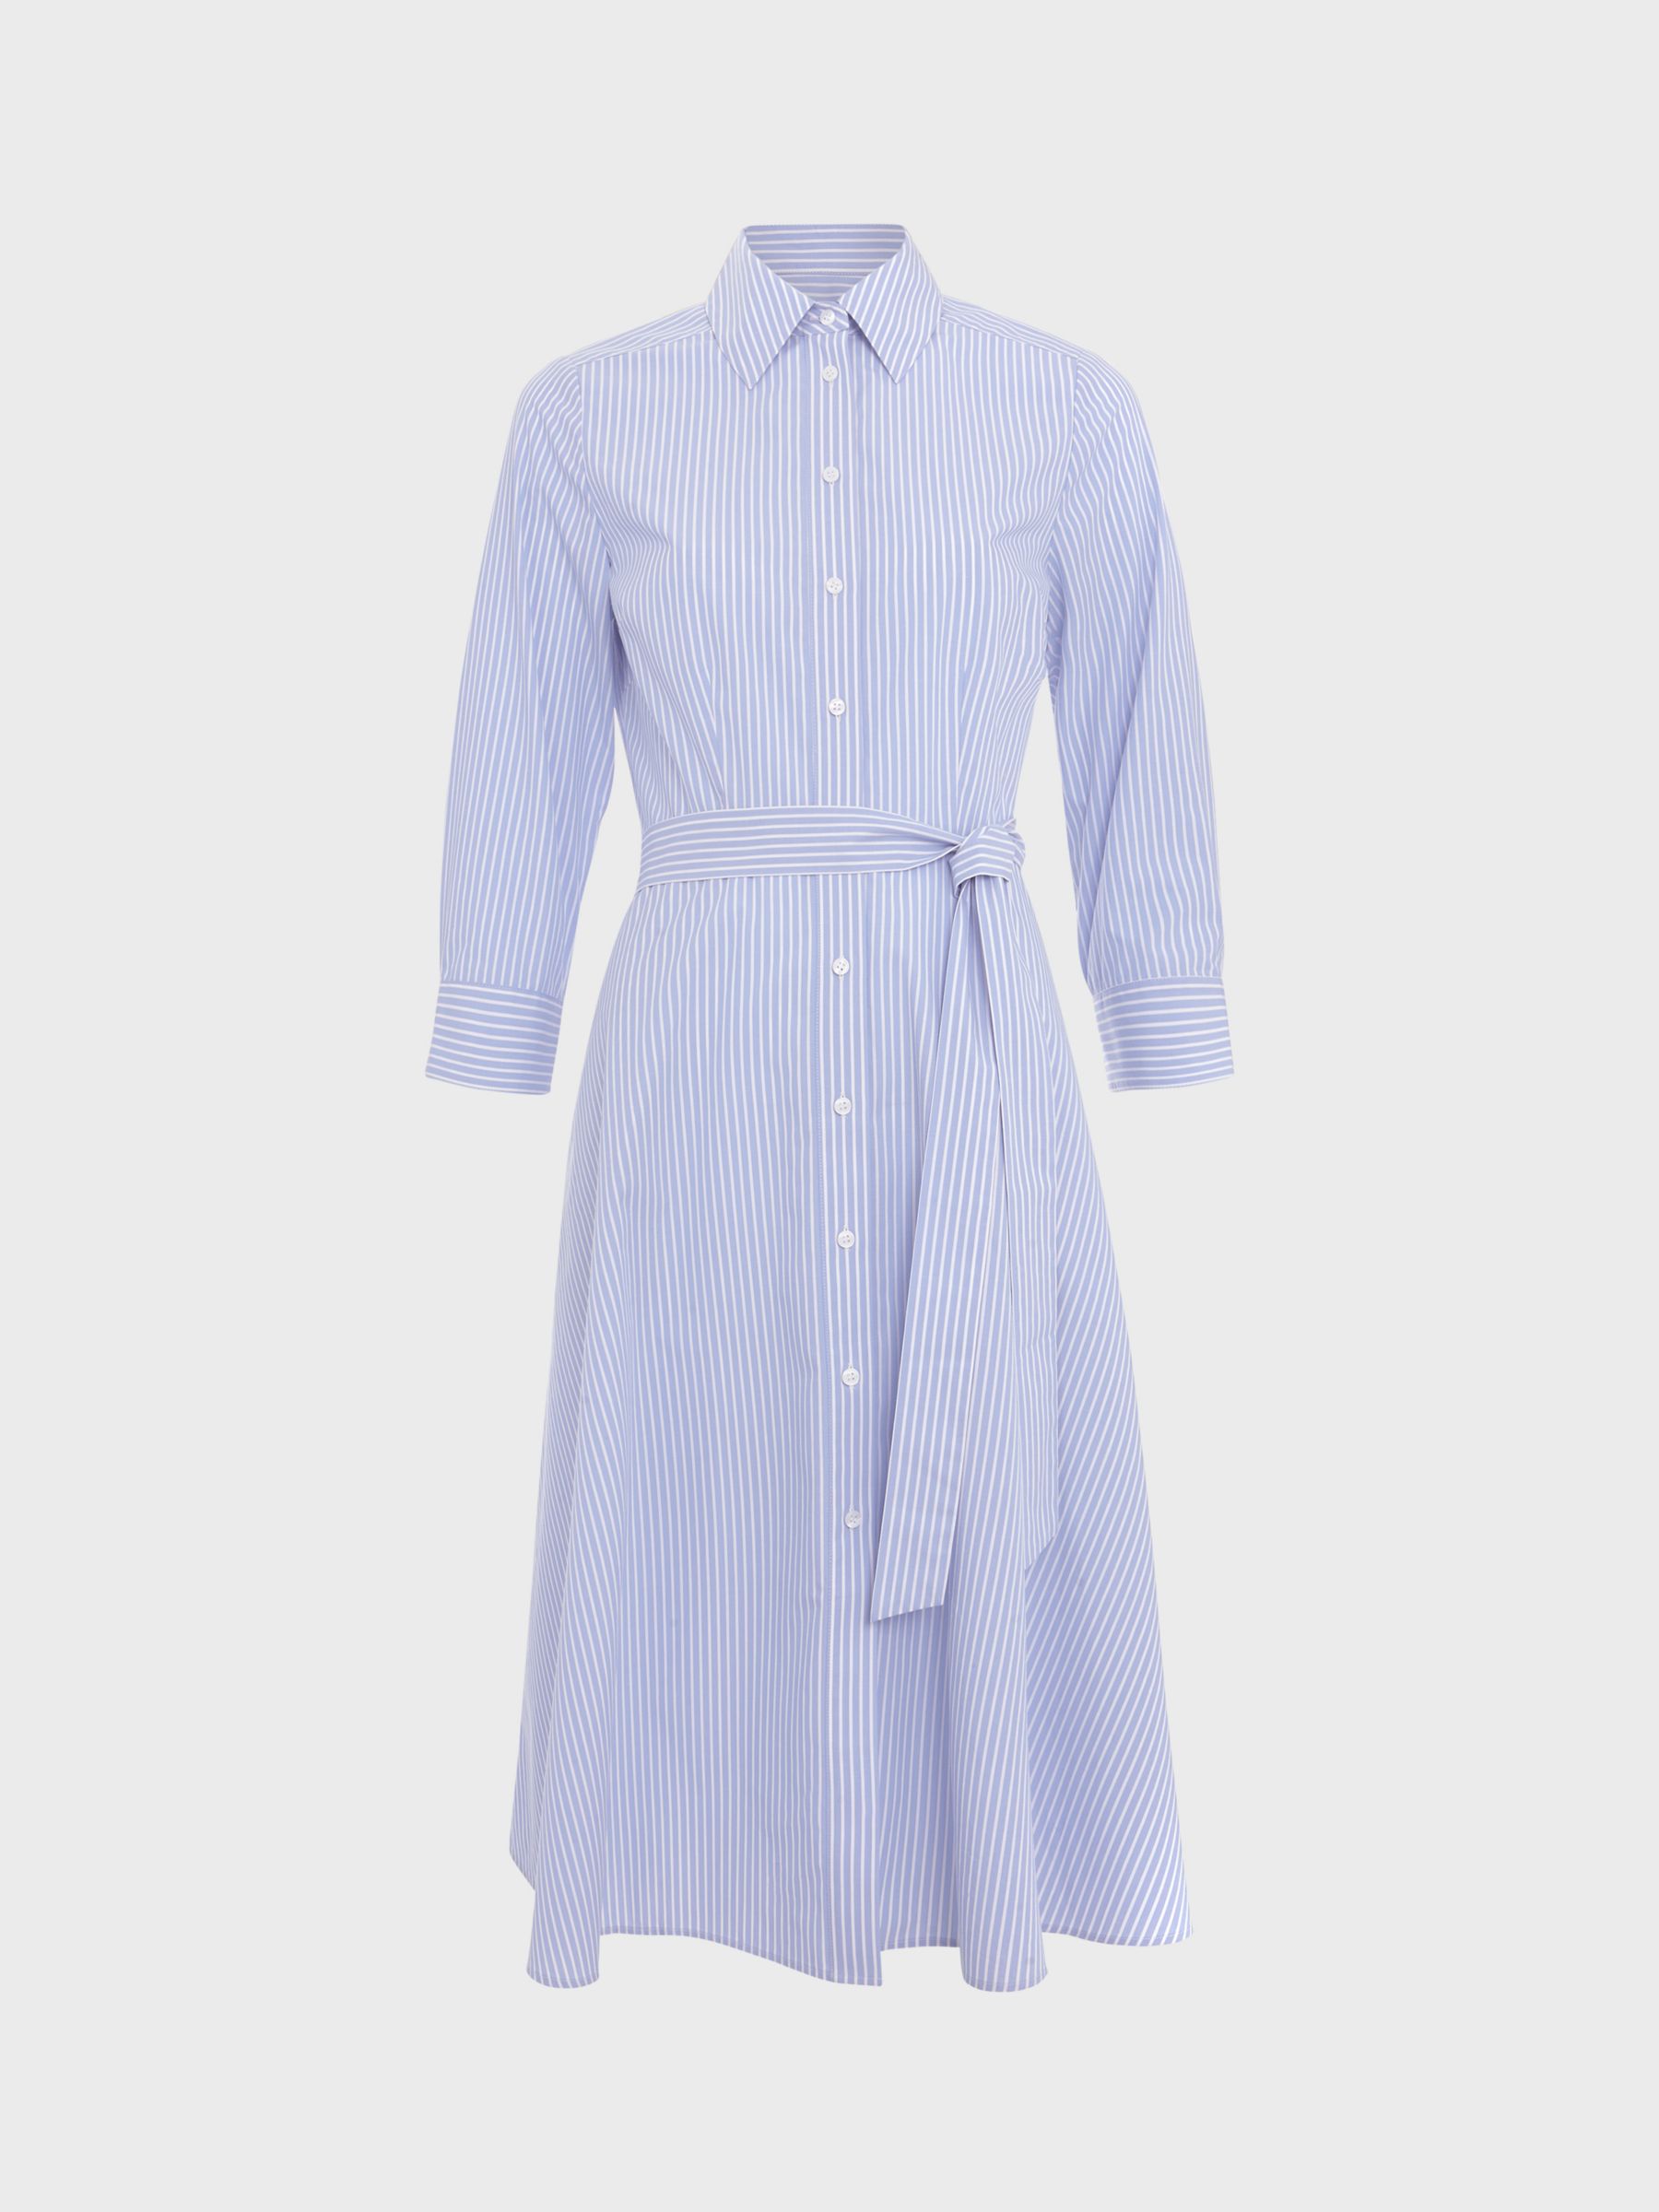 Hobbs Harlow Cotton Knee Length Shirt Dress, Blue/Ivory, 10